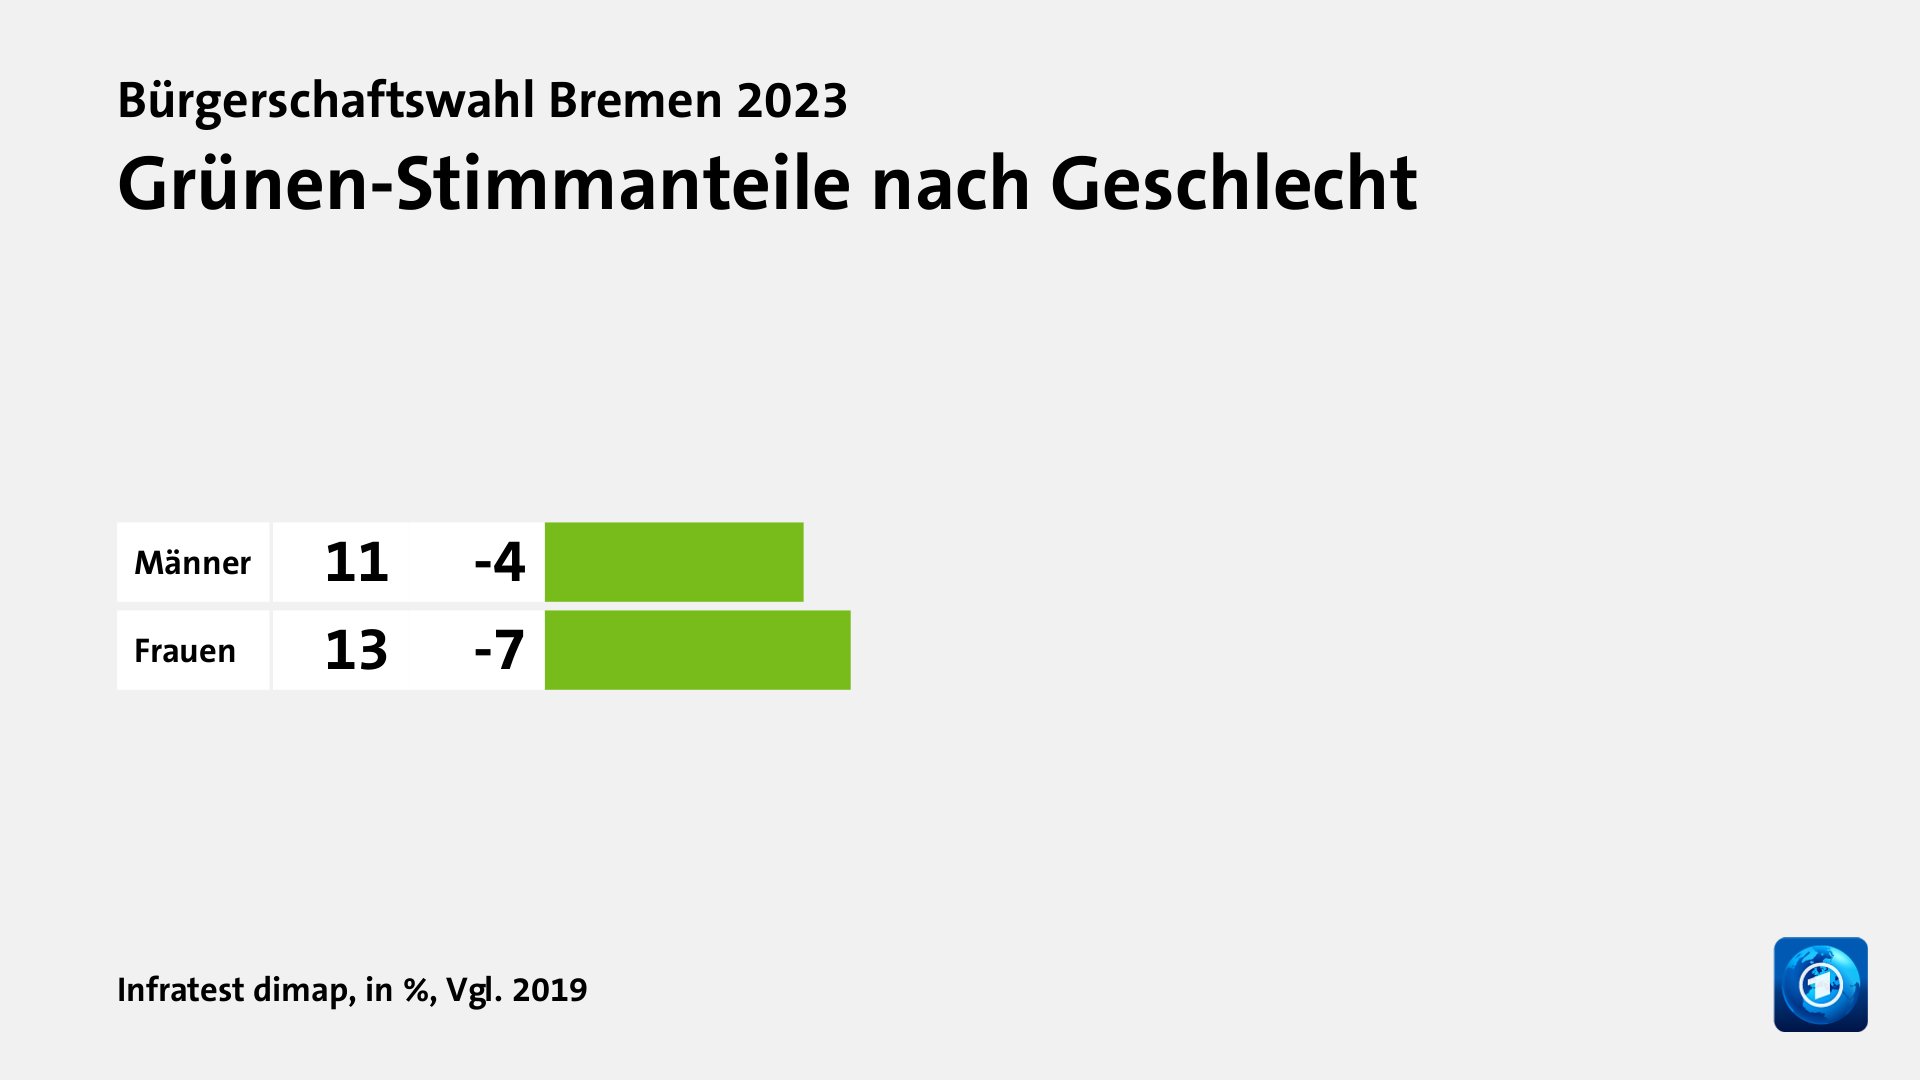 Grünen-Stimmanteile nach Geschlecht, in %, Vgl. 2019: Männer 11, Frauen 13, Quelle: Infratest dimap